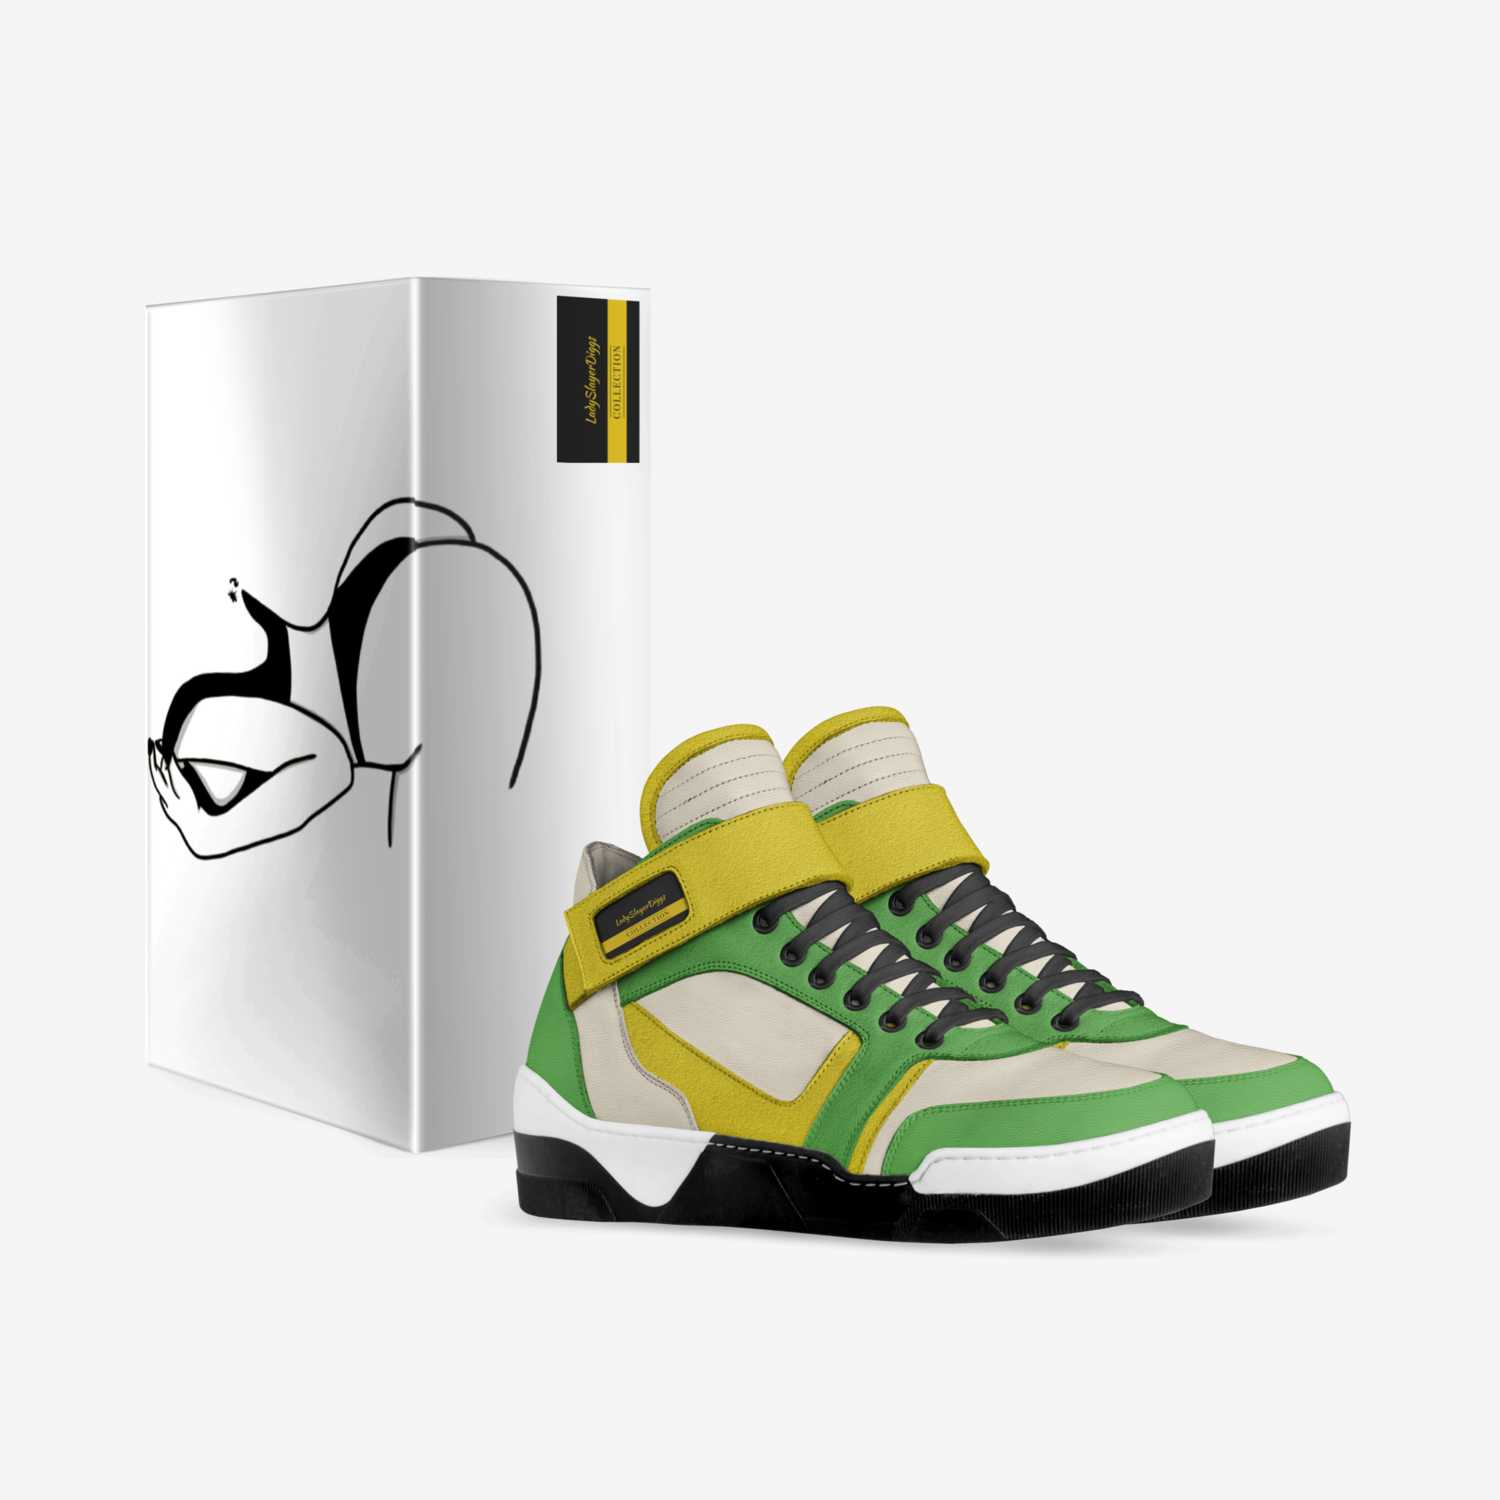 LadySlayerDiggs custom made in Italy shoes by Mackenzie Hunter | Box view